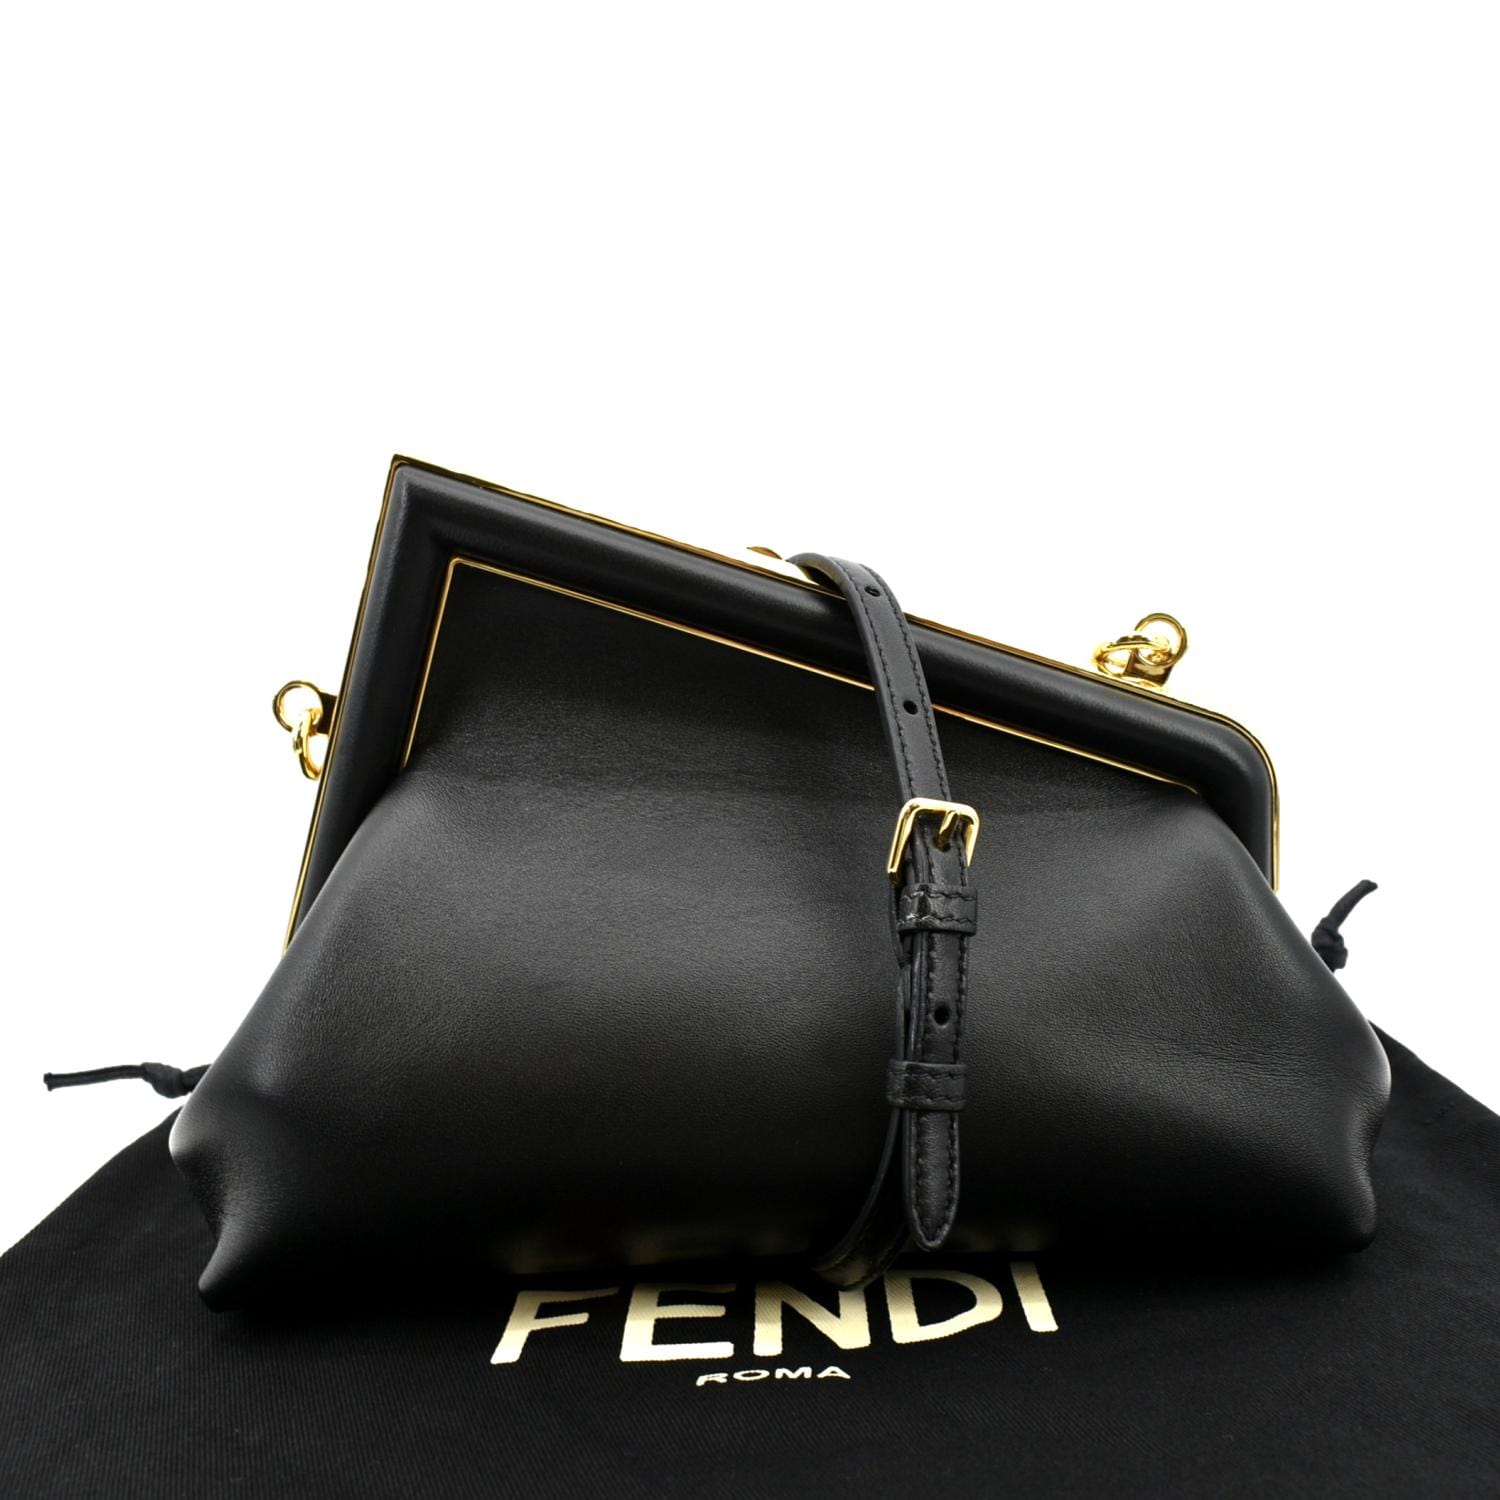 FENDI Shoulder bag BAGUETTE MIDI in black